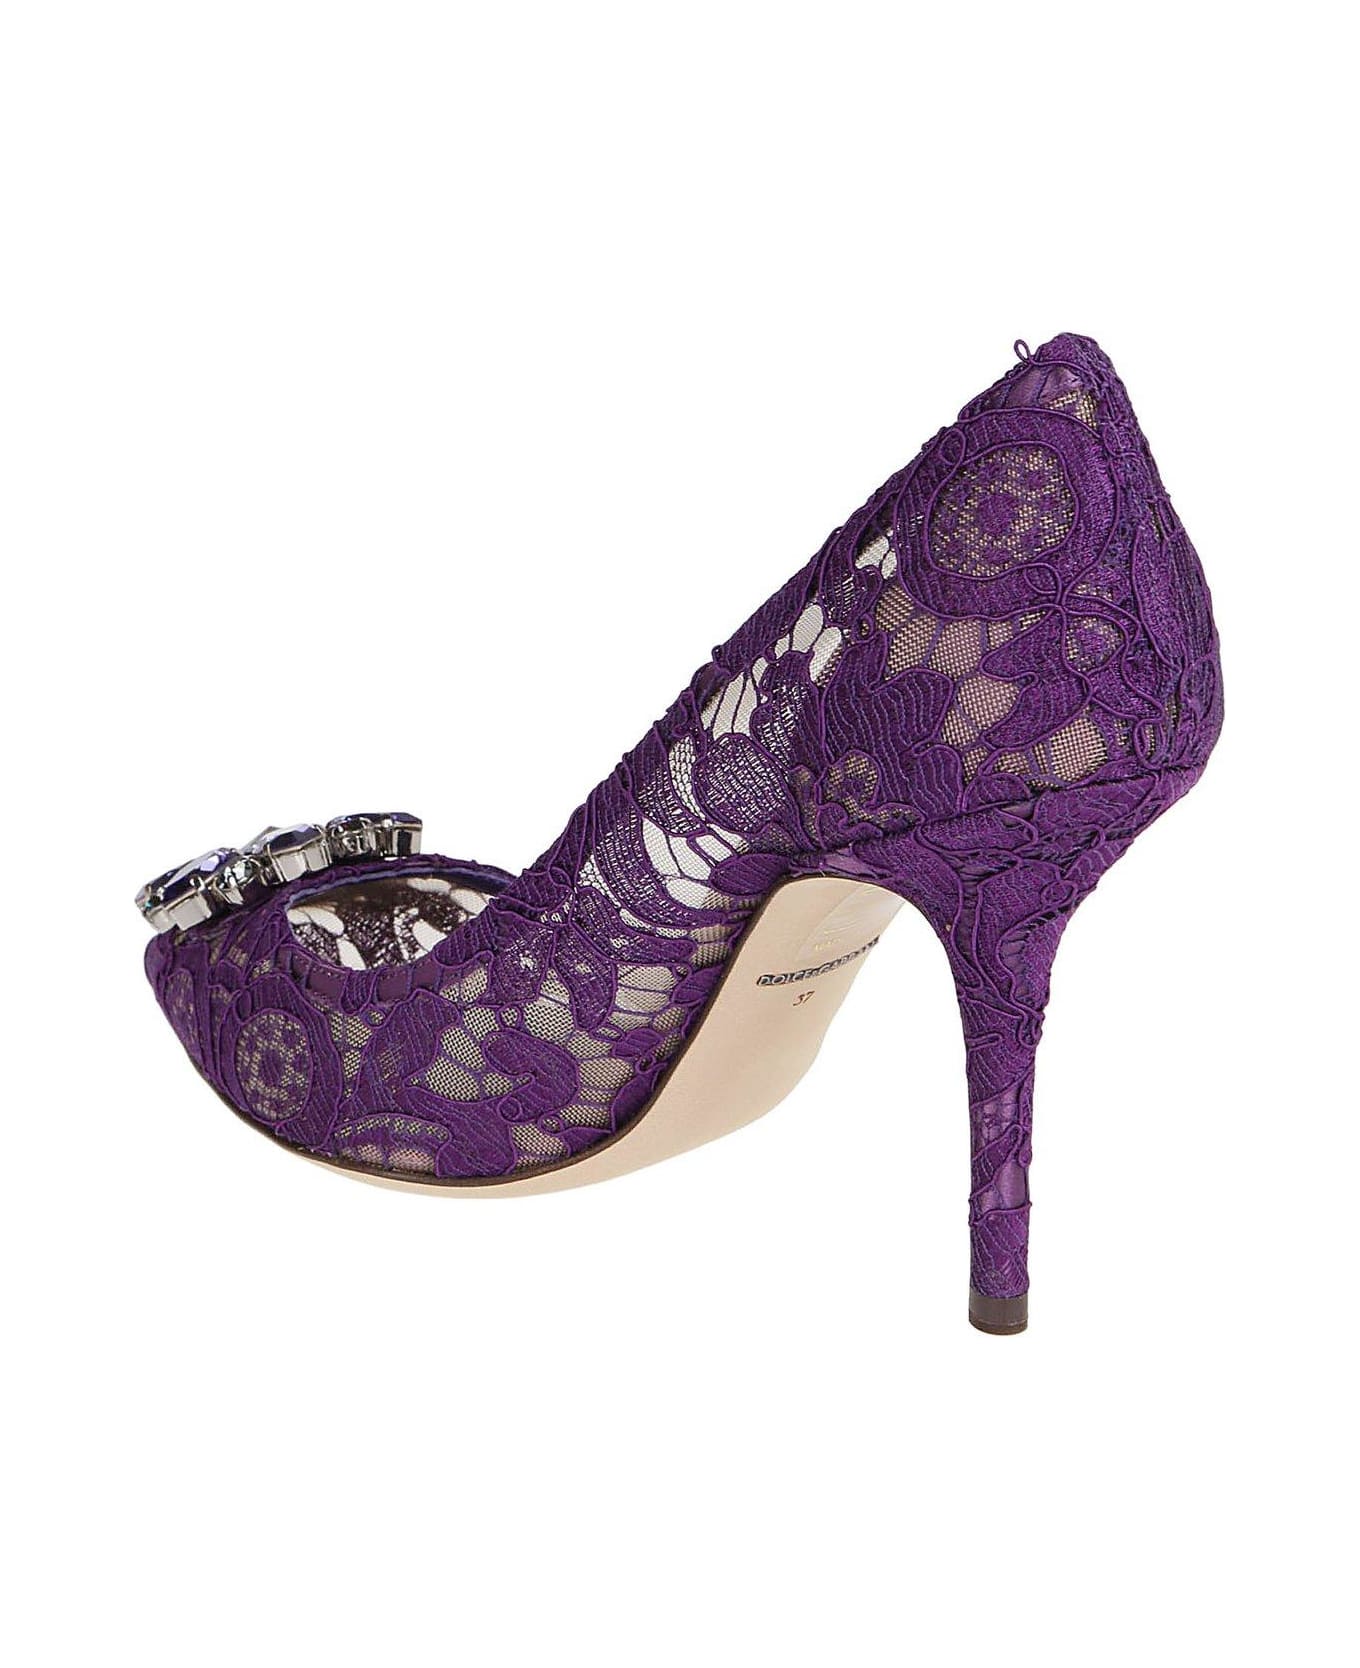 Dolce & Gabbana Taormina Lace Embellished Pumps - Viola